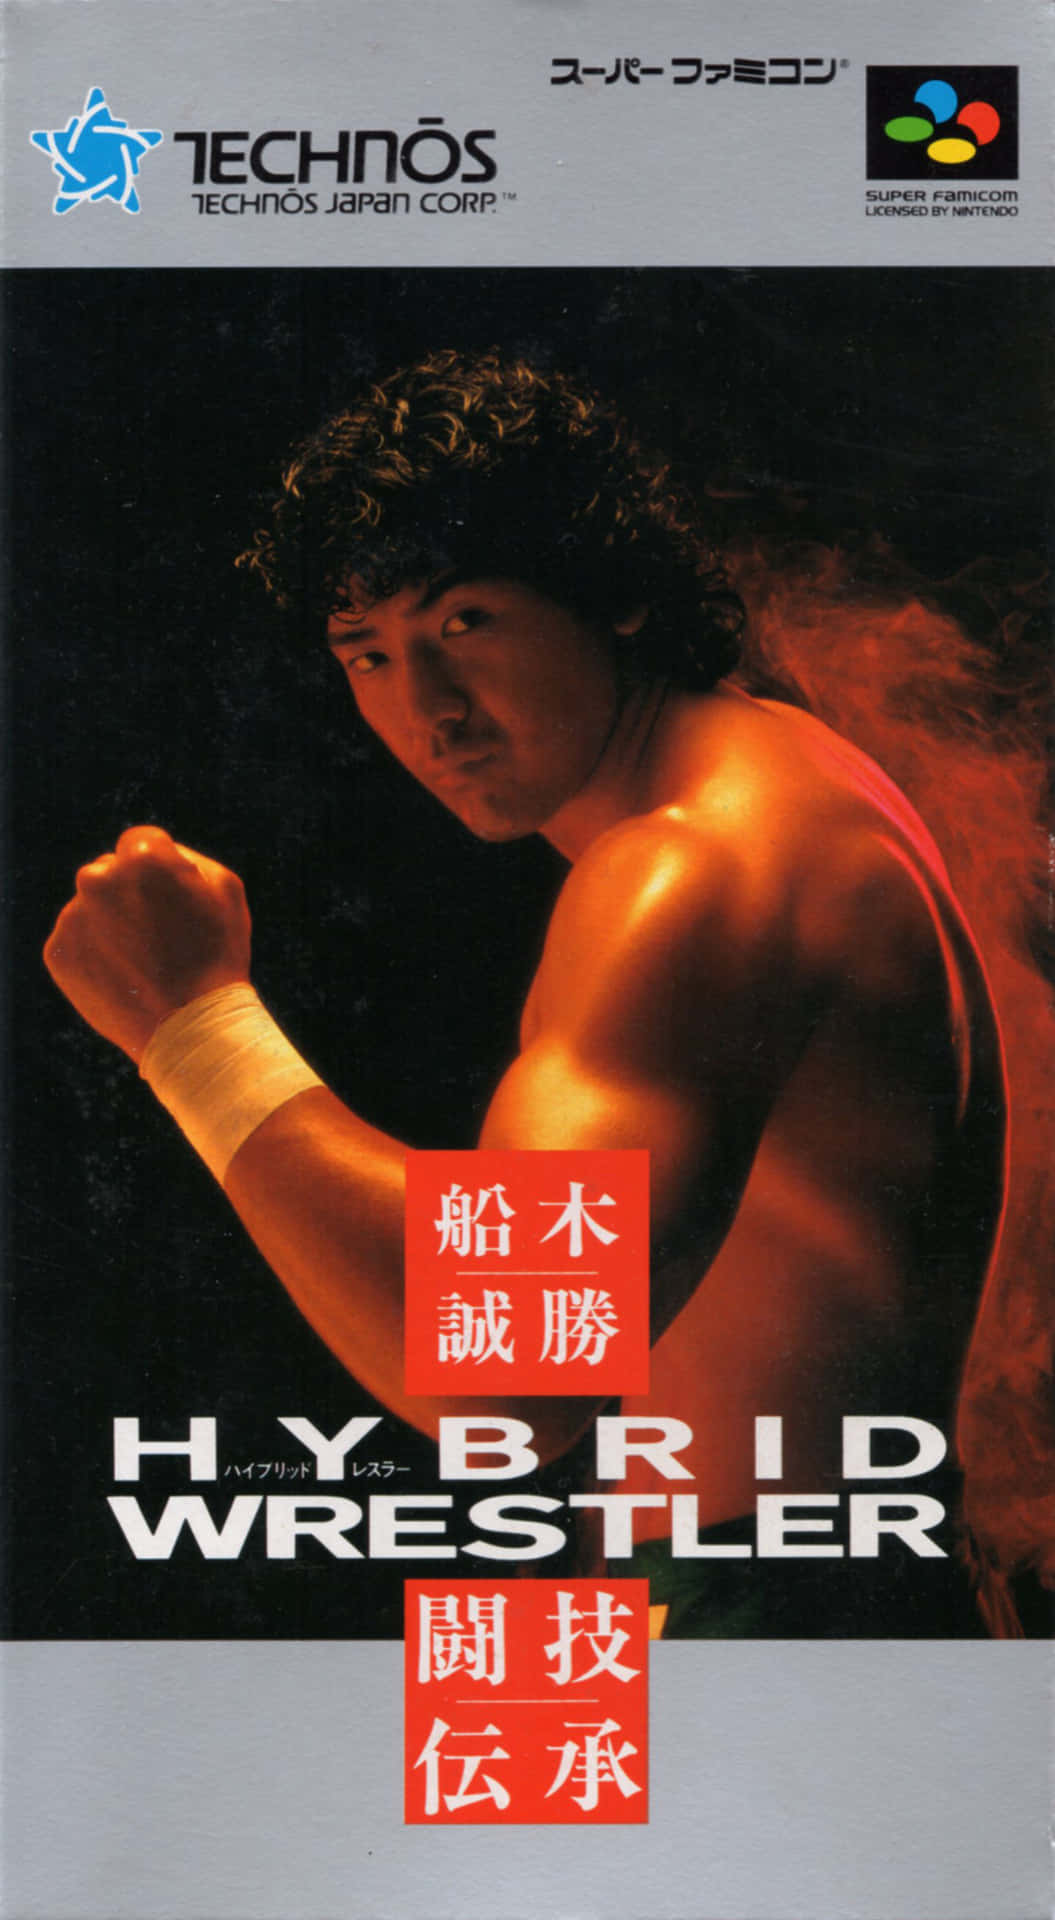 Video-spil Hybrid Wrestler Med Masakatsu Funaki Wallpaper